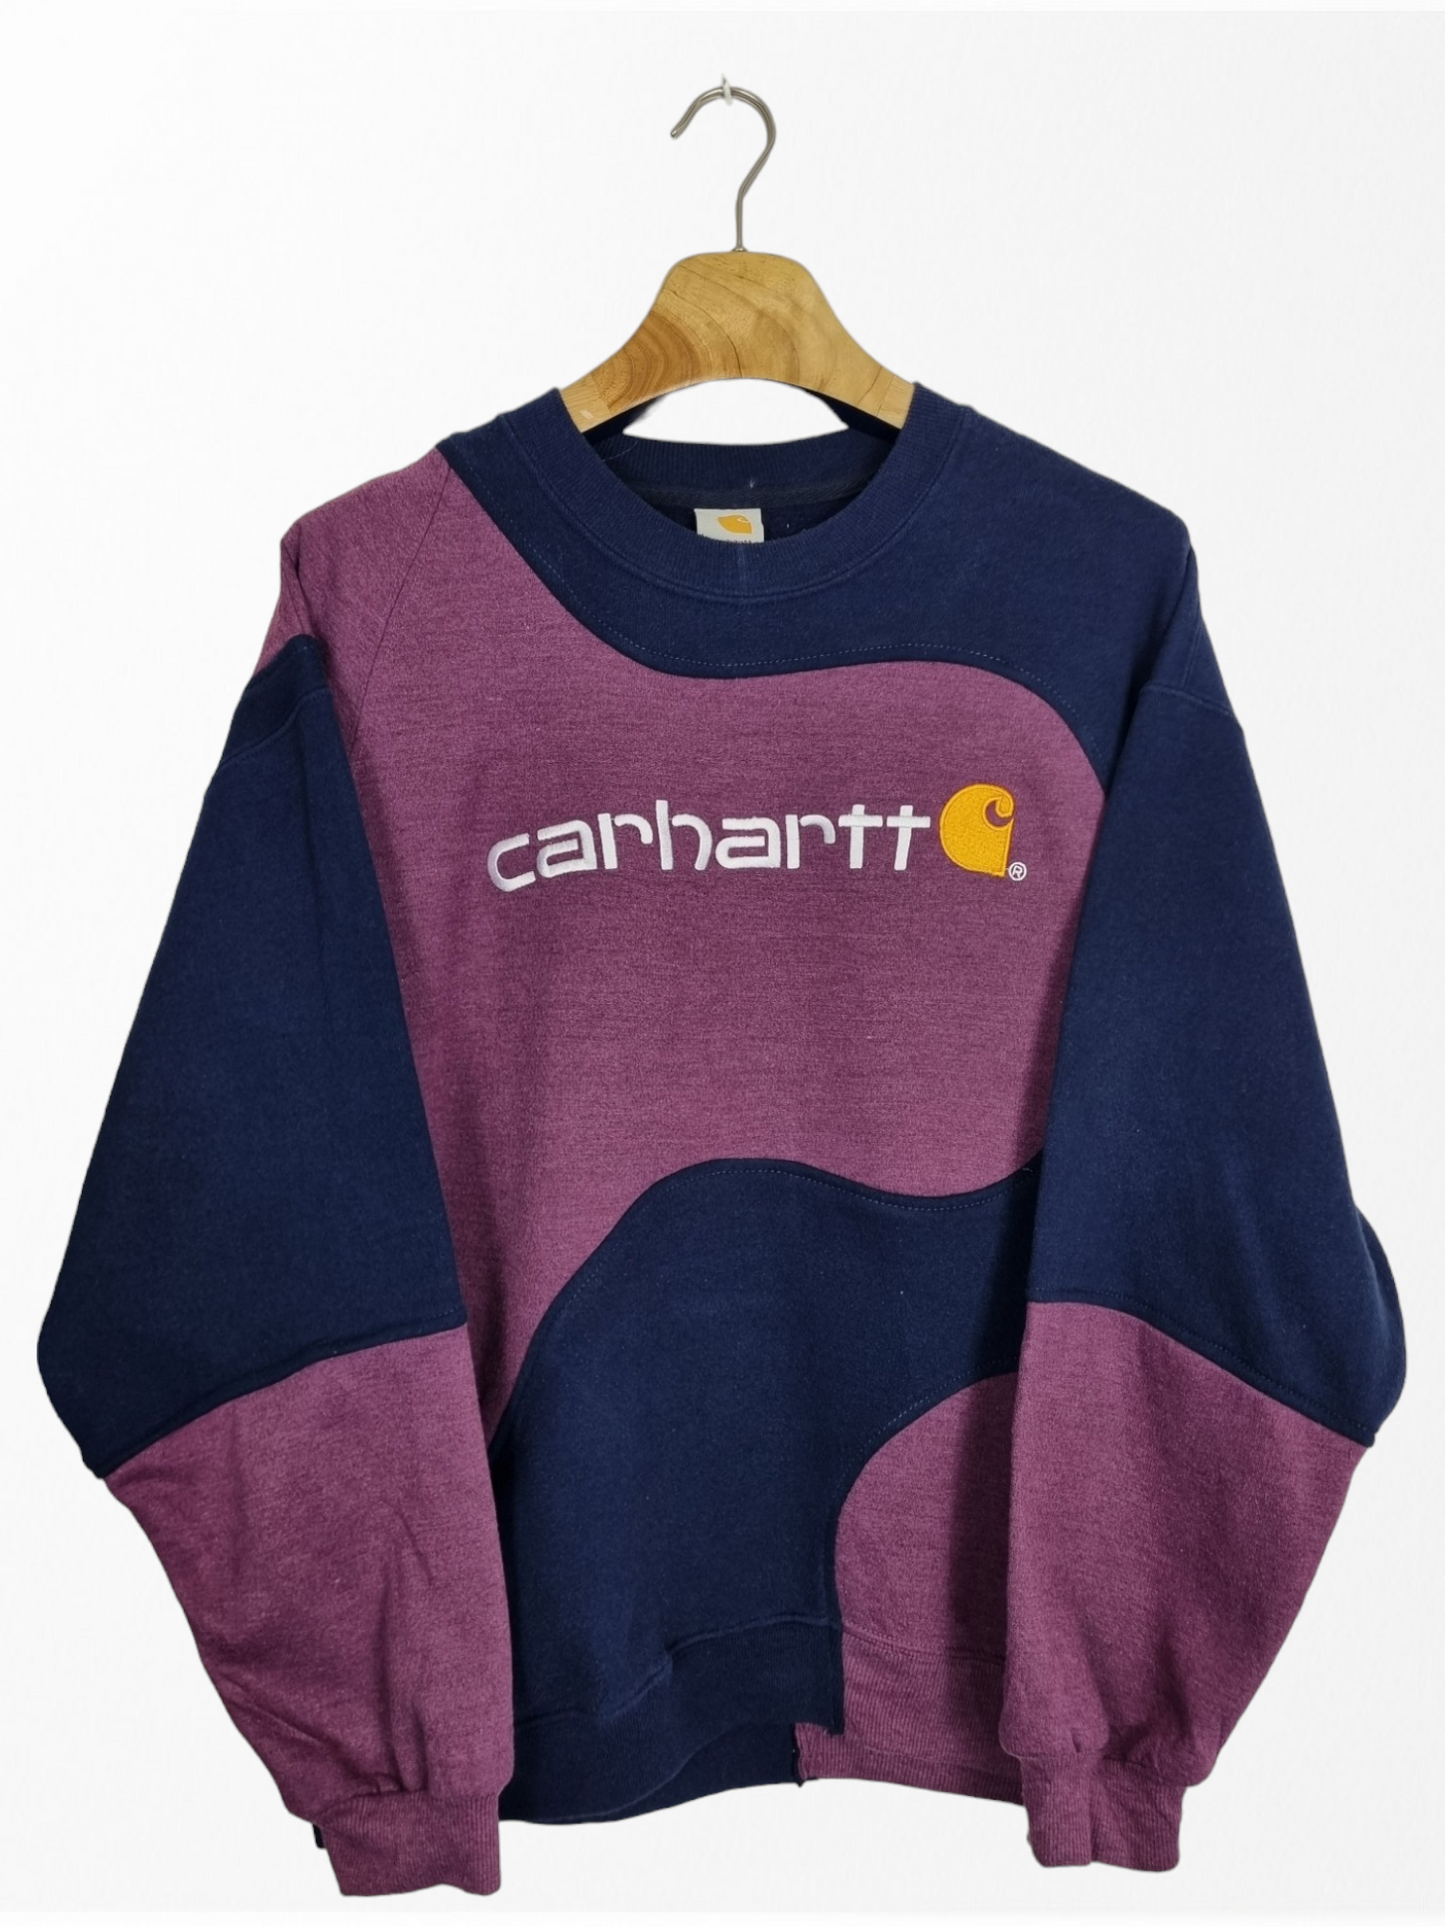 Carhartt sweater maat M